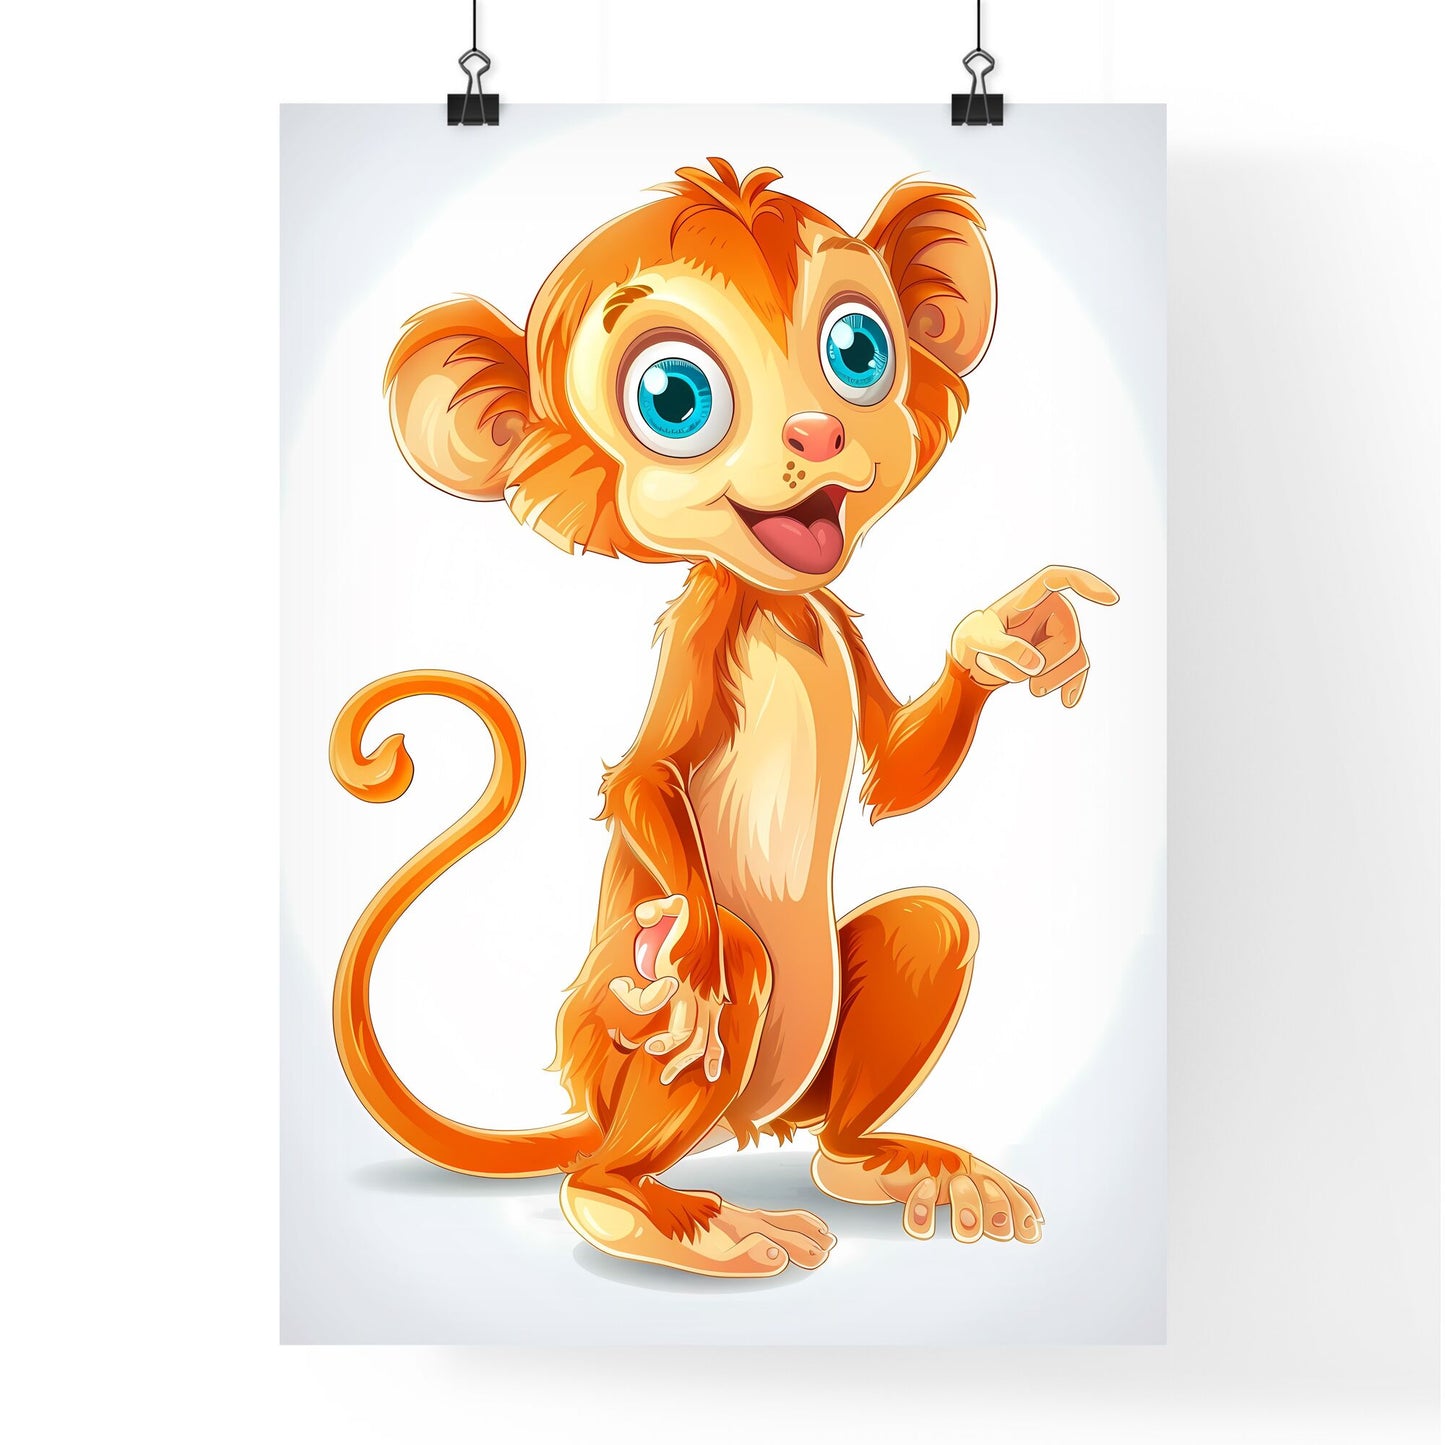 Mischievous Monkey: Vibrant, Humorous Animal Sticker Illustration for Exploring Concept of Lightheartedness in Art Default Title